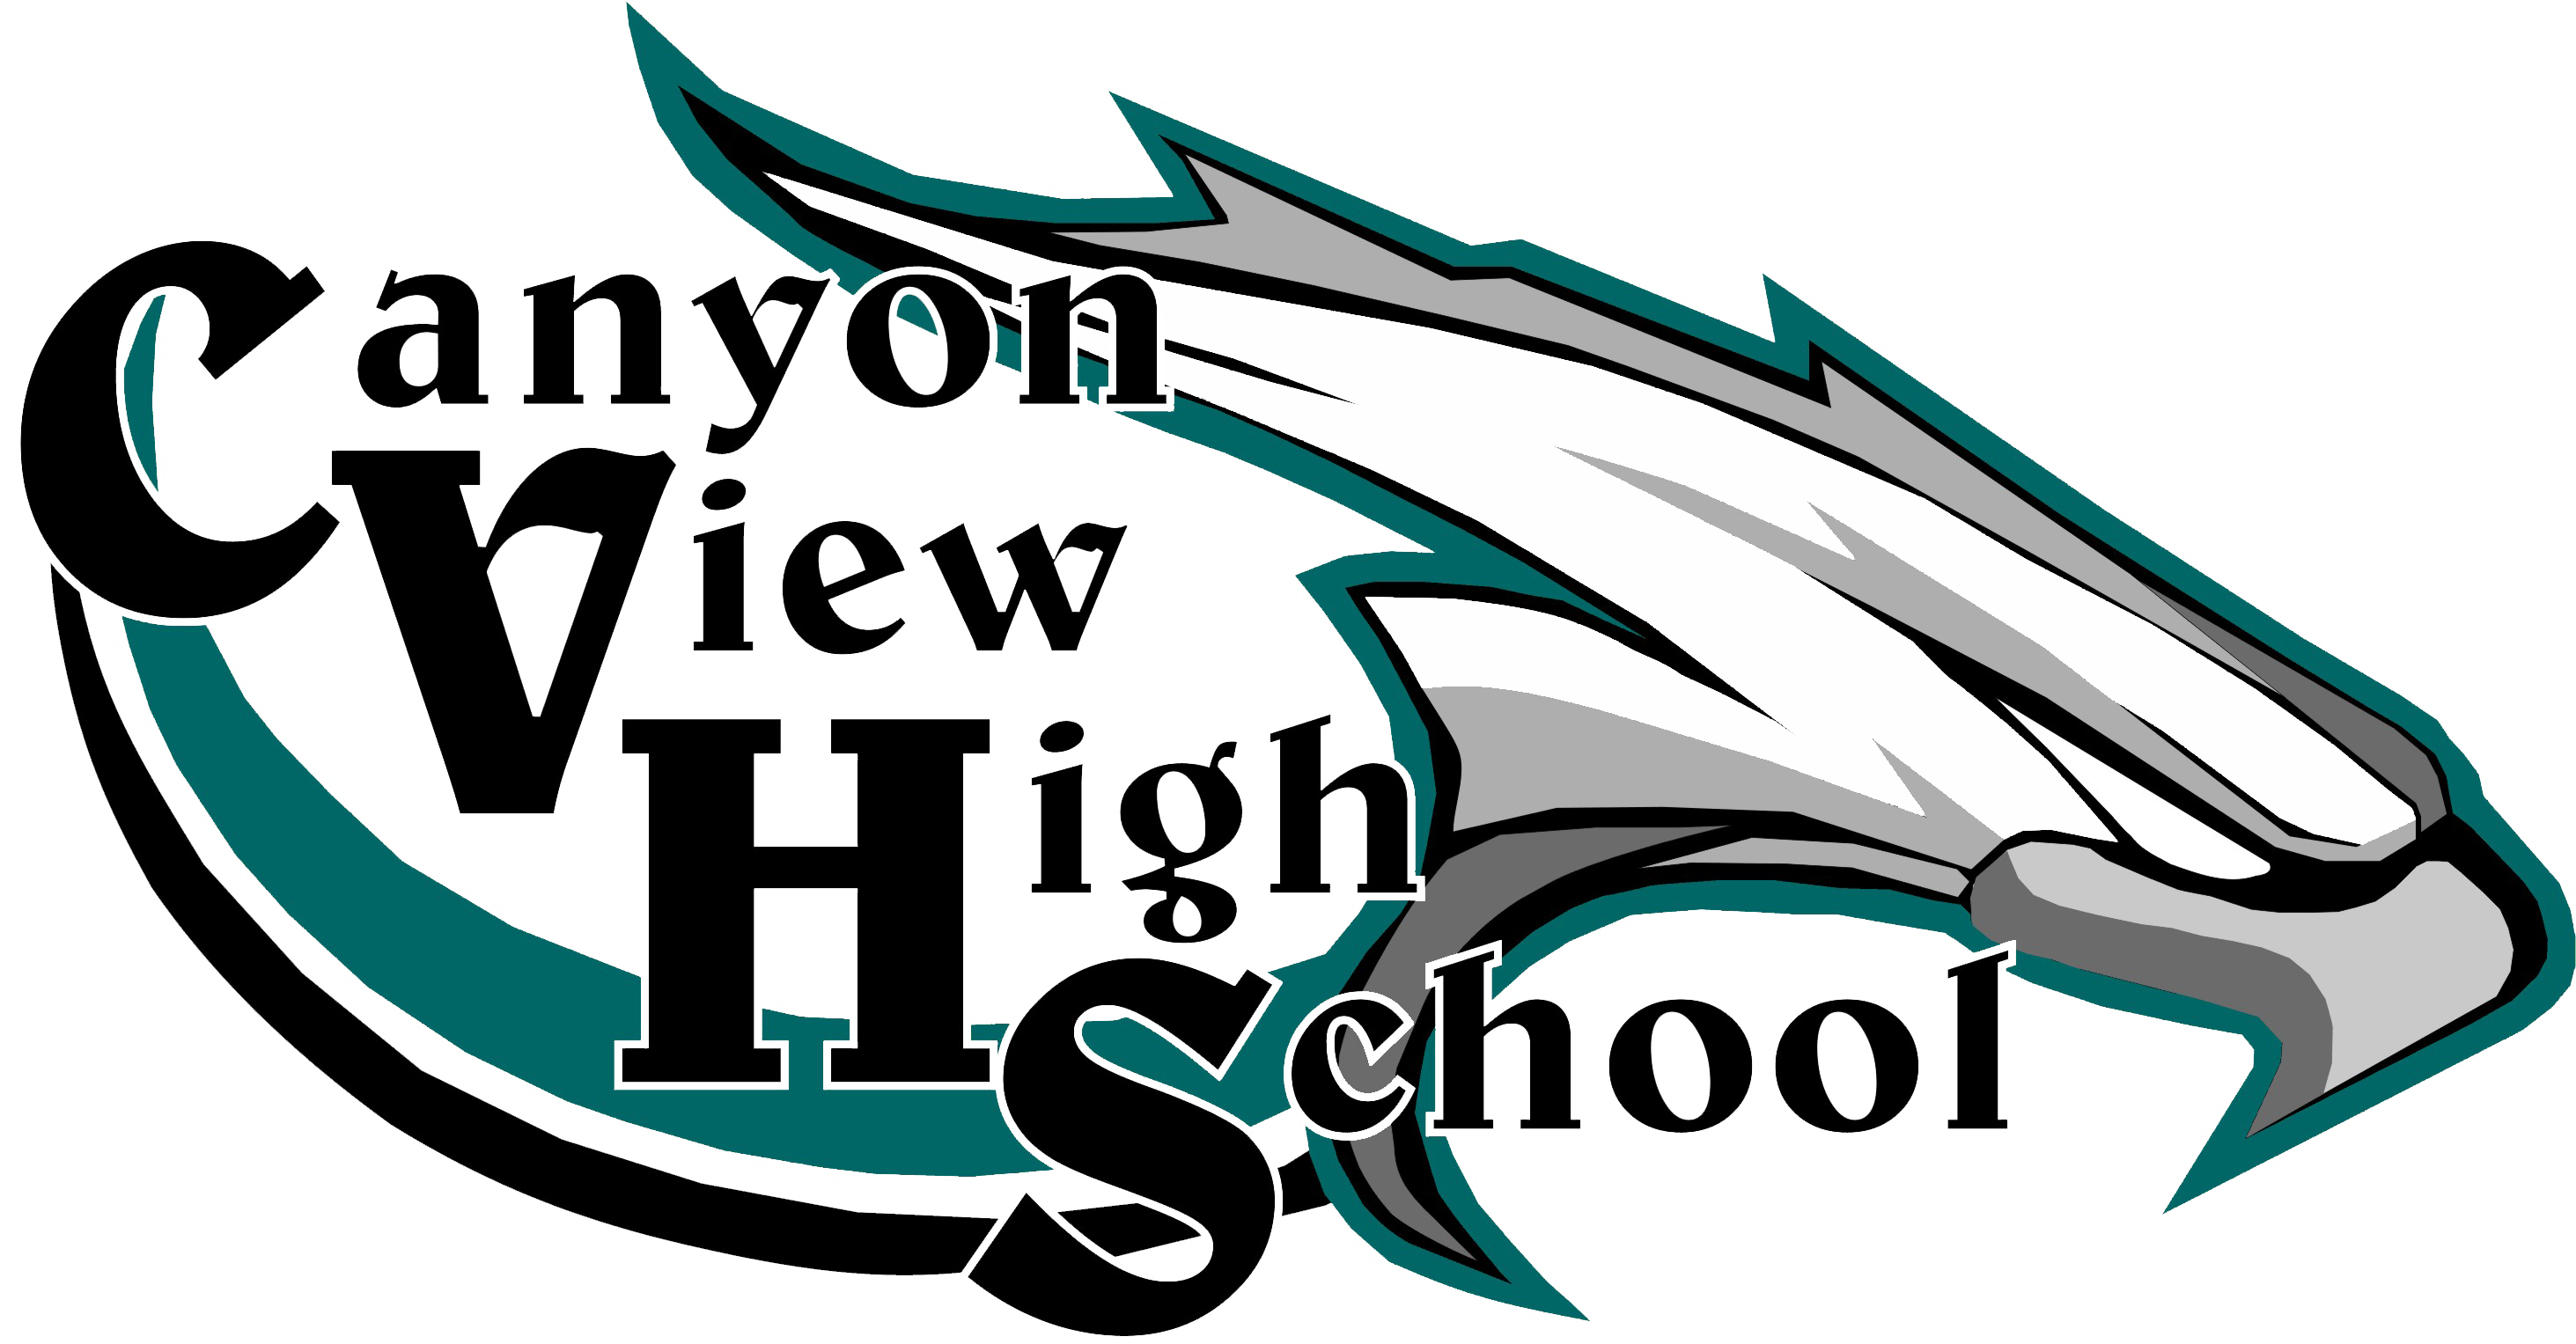 Canyon View Falcons - Canyon View High School Logo (2926x1527)